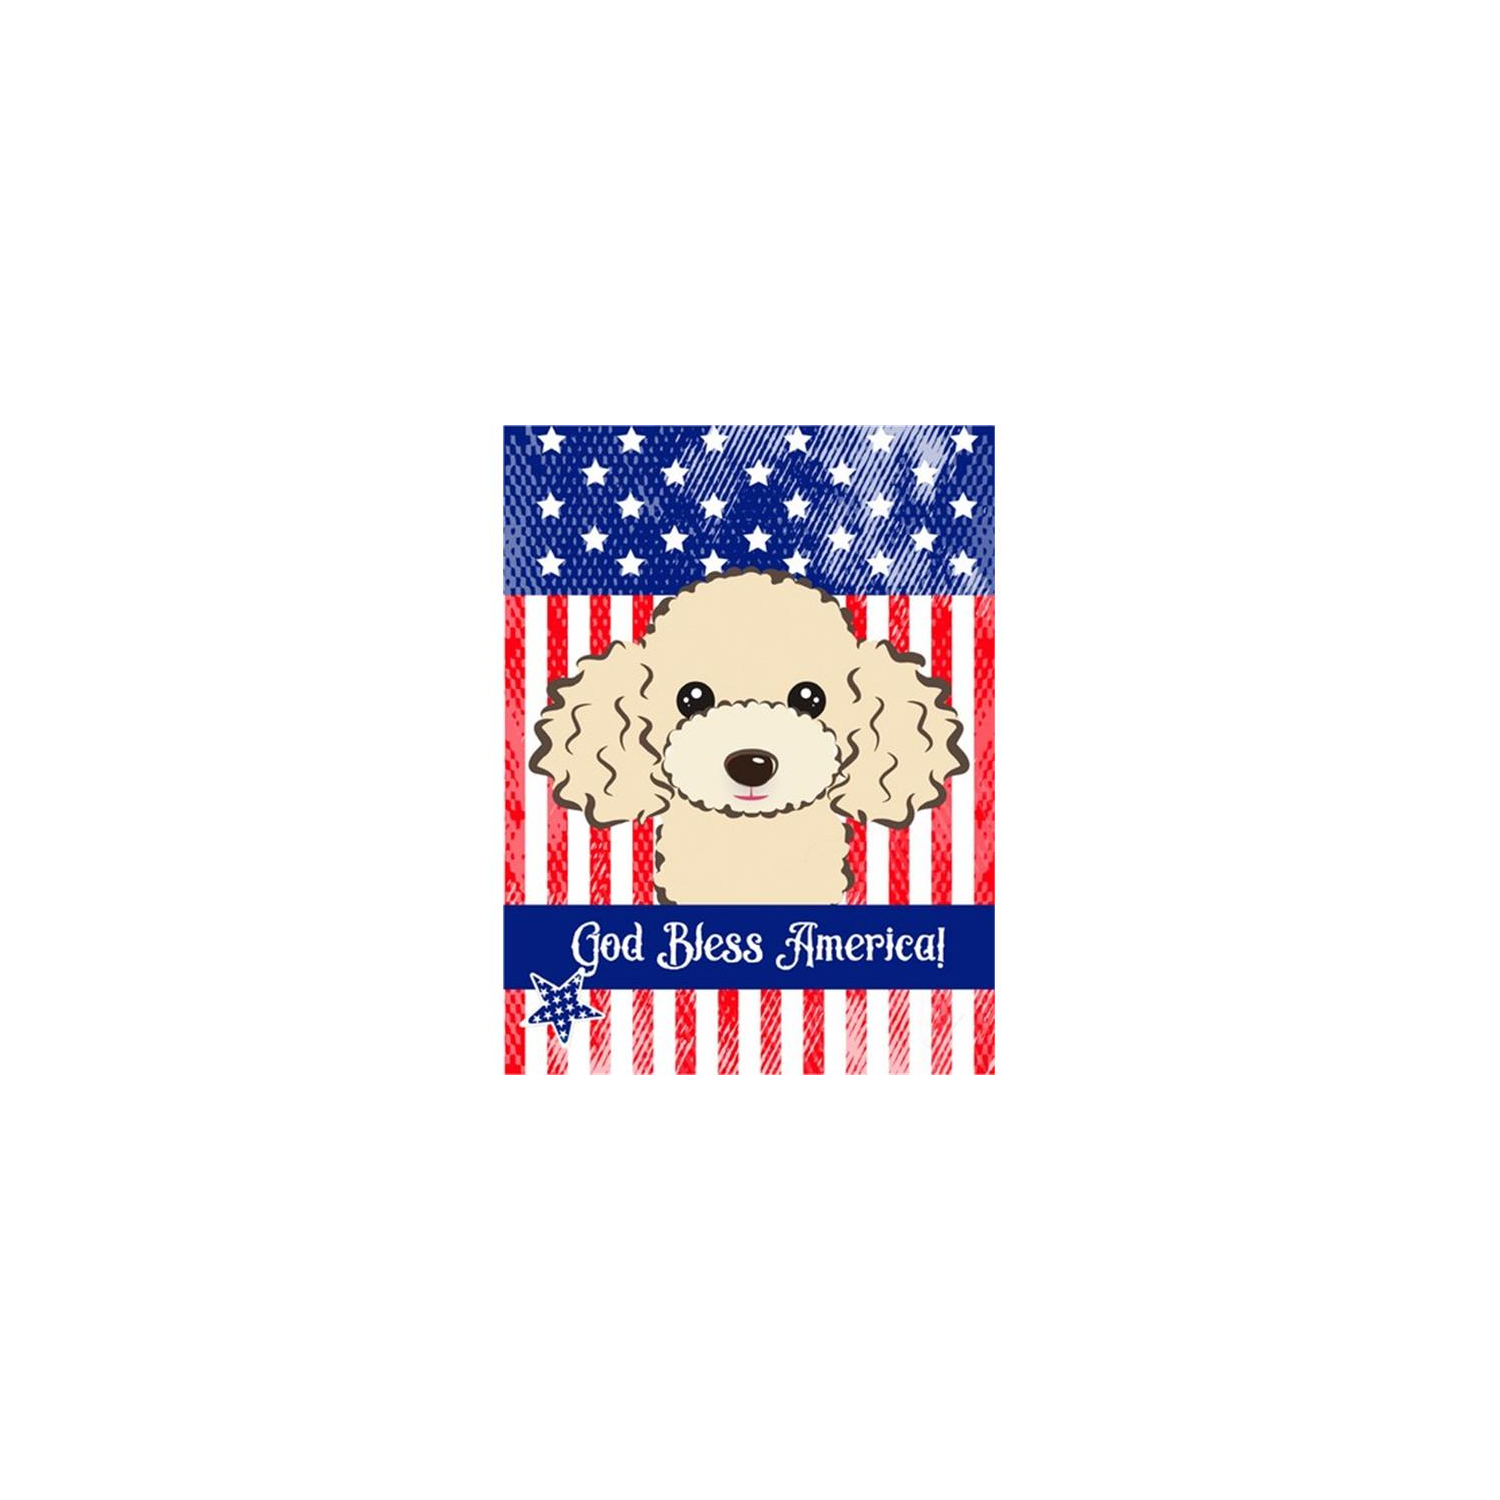 Carolines Treasures BB2188GF God Bless American Flag with Buff Poodle Flag Garden